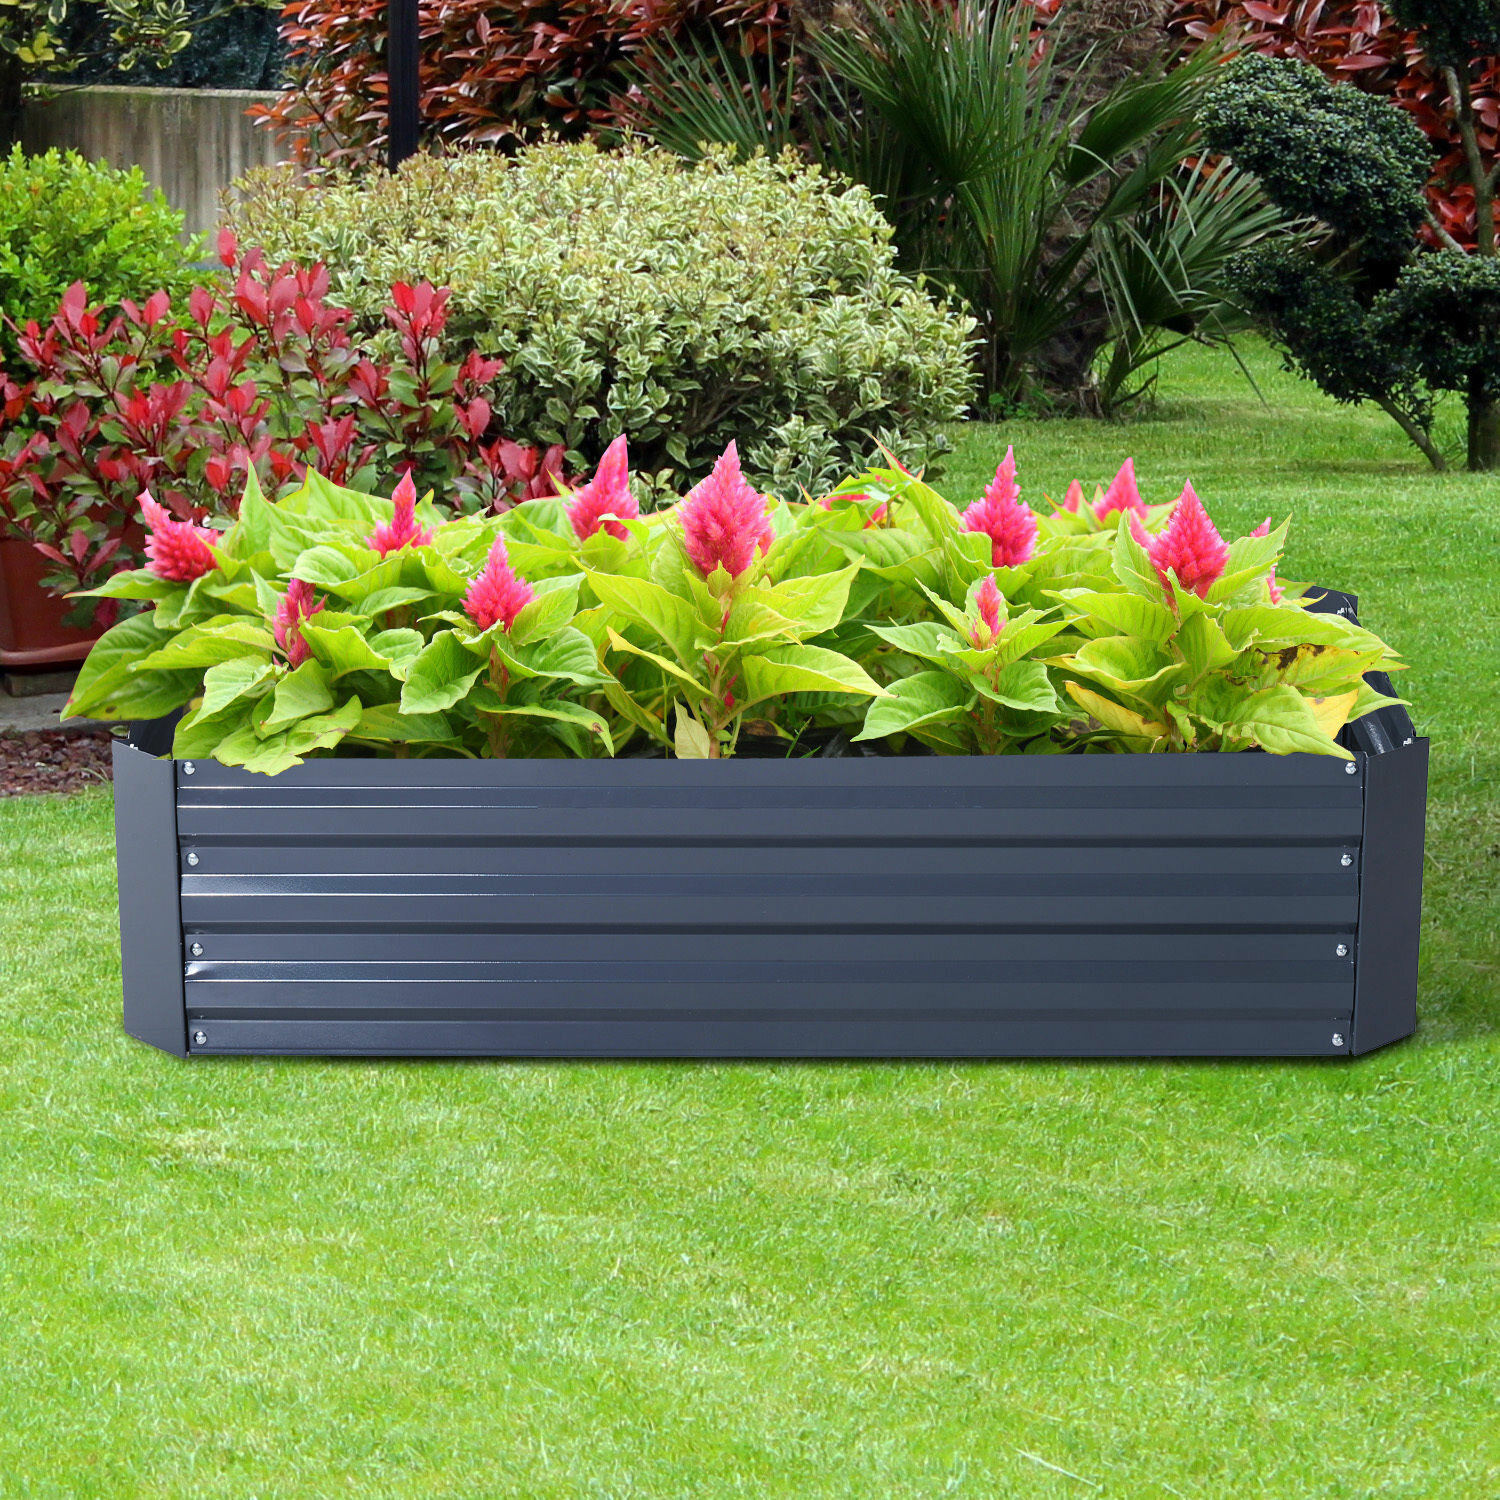 Arlmont Co Garza 4 Ft X 2 Ft Galvanized Steel Raised Garden Bed Reviews Wayfair